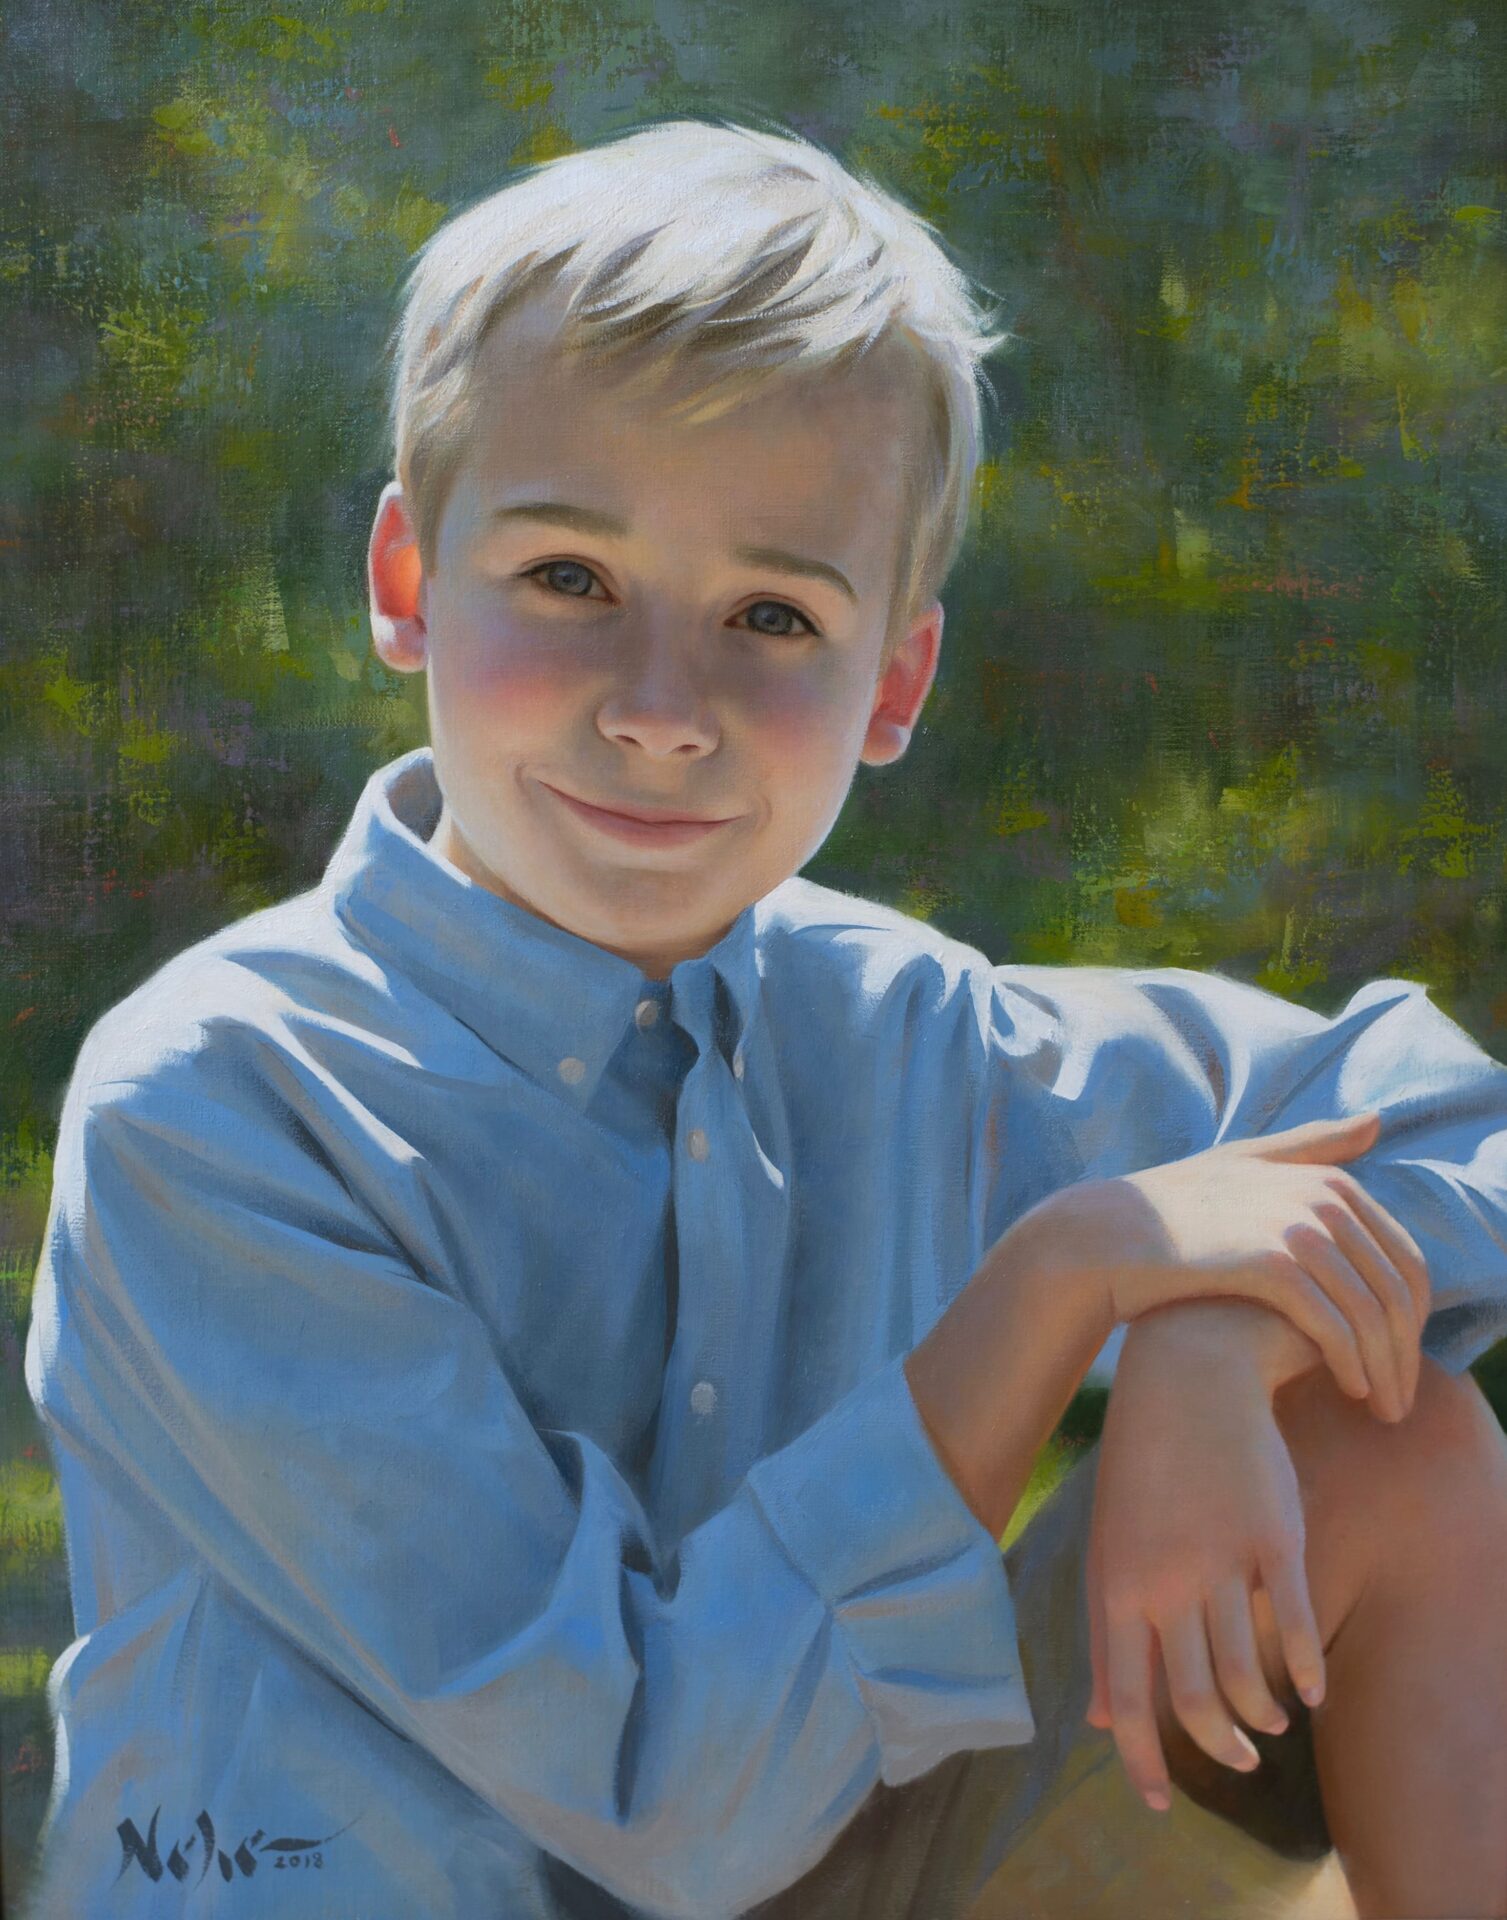 Portrait of a young boy